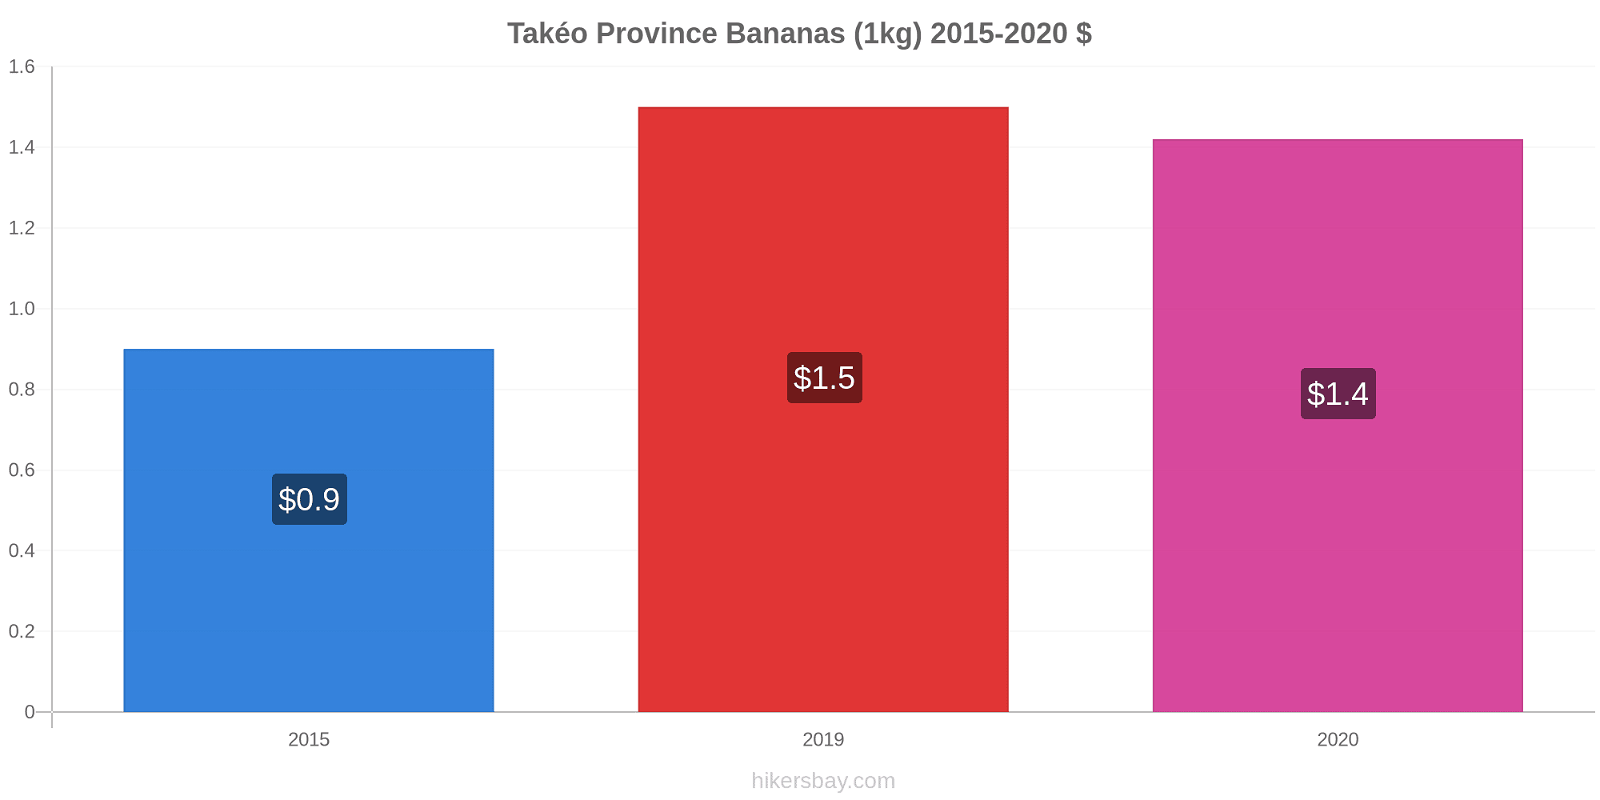 Takéo Province price changes Bananas (1kg) hikersbay.com